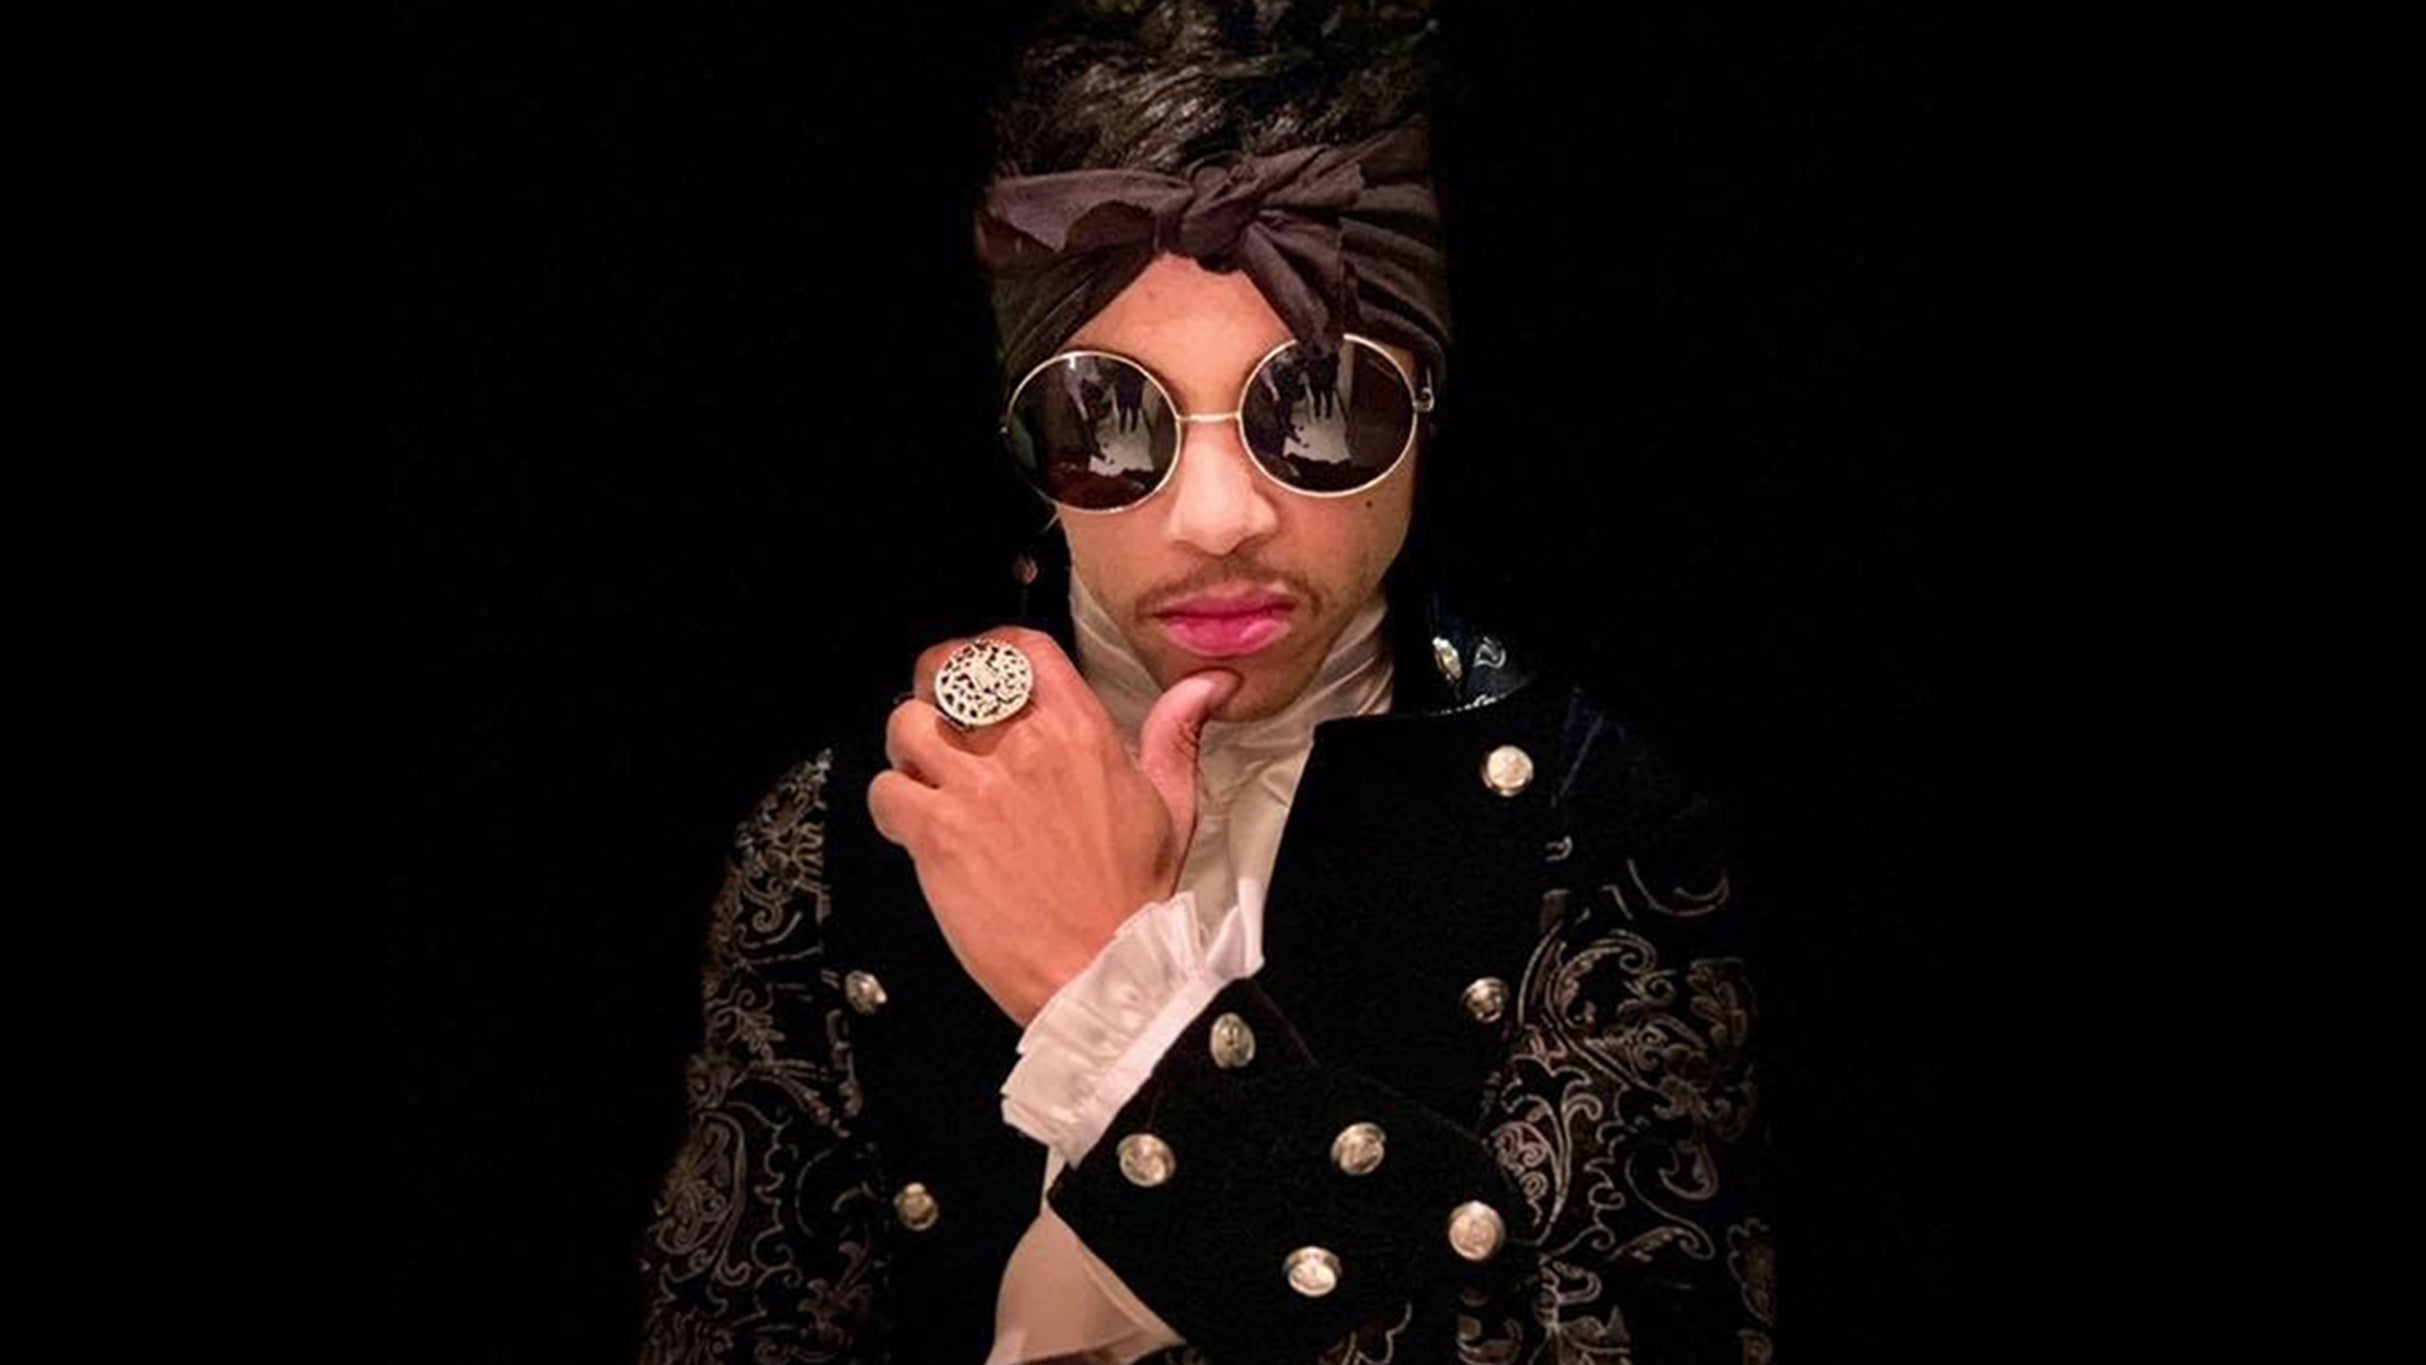 The Purple Madness - Prince Tribute Show in North Myrtle Beach promo photo for Citi® Cardmember Preferred presale offer code